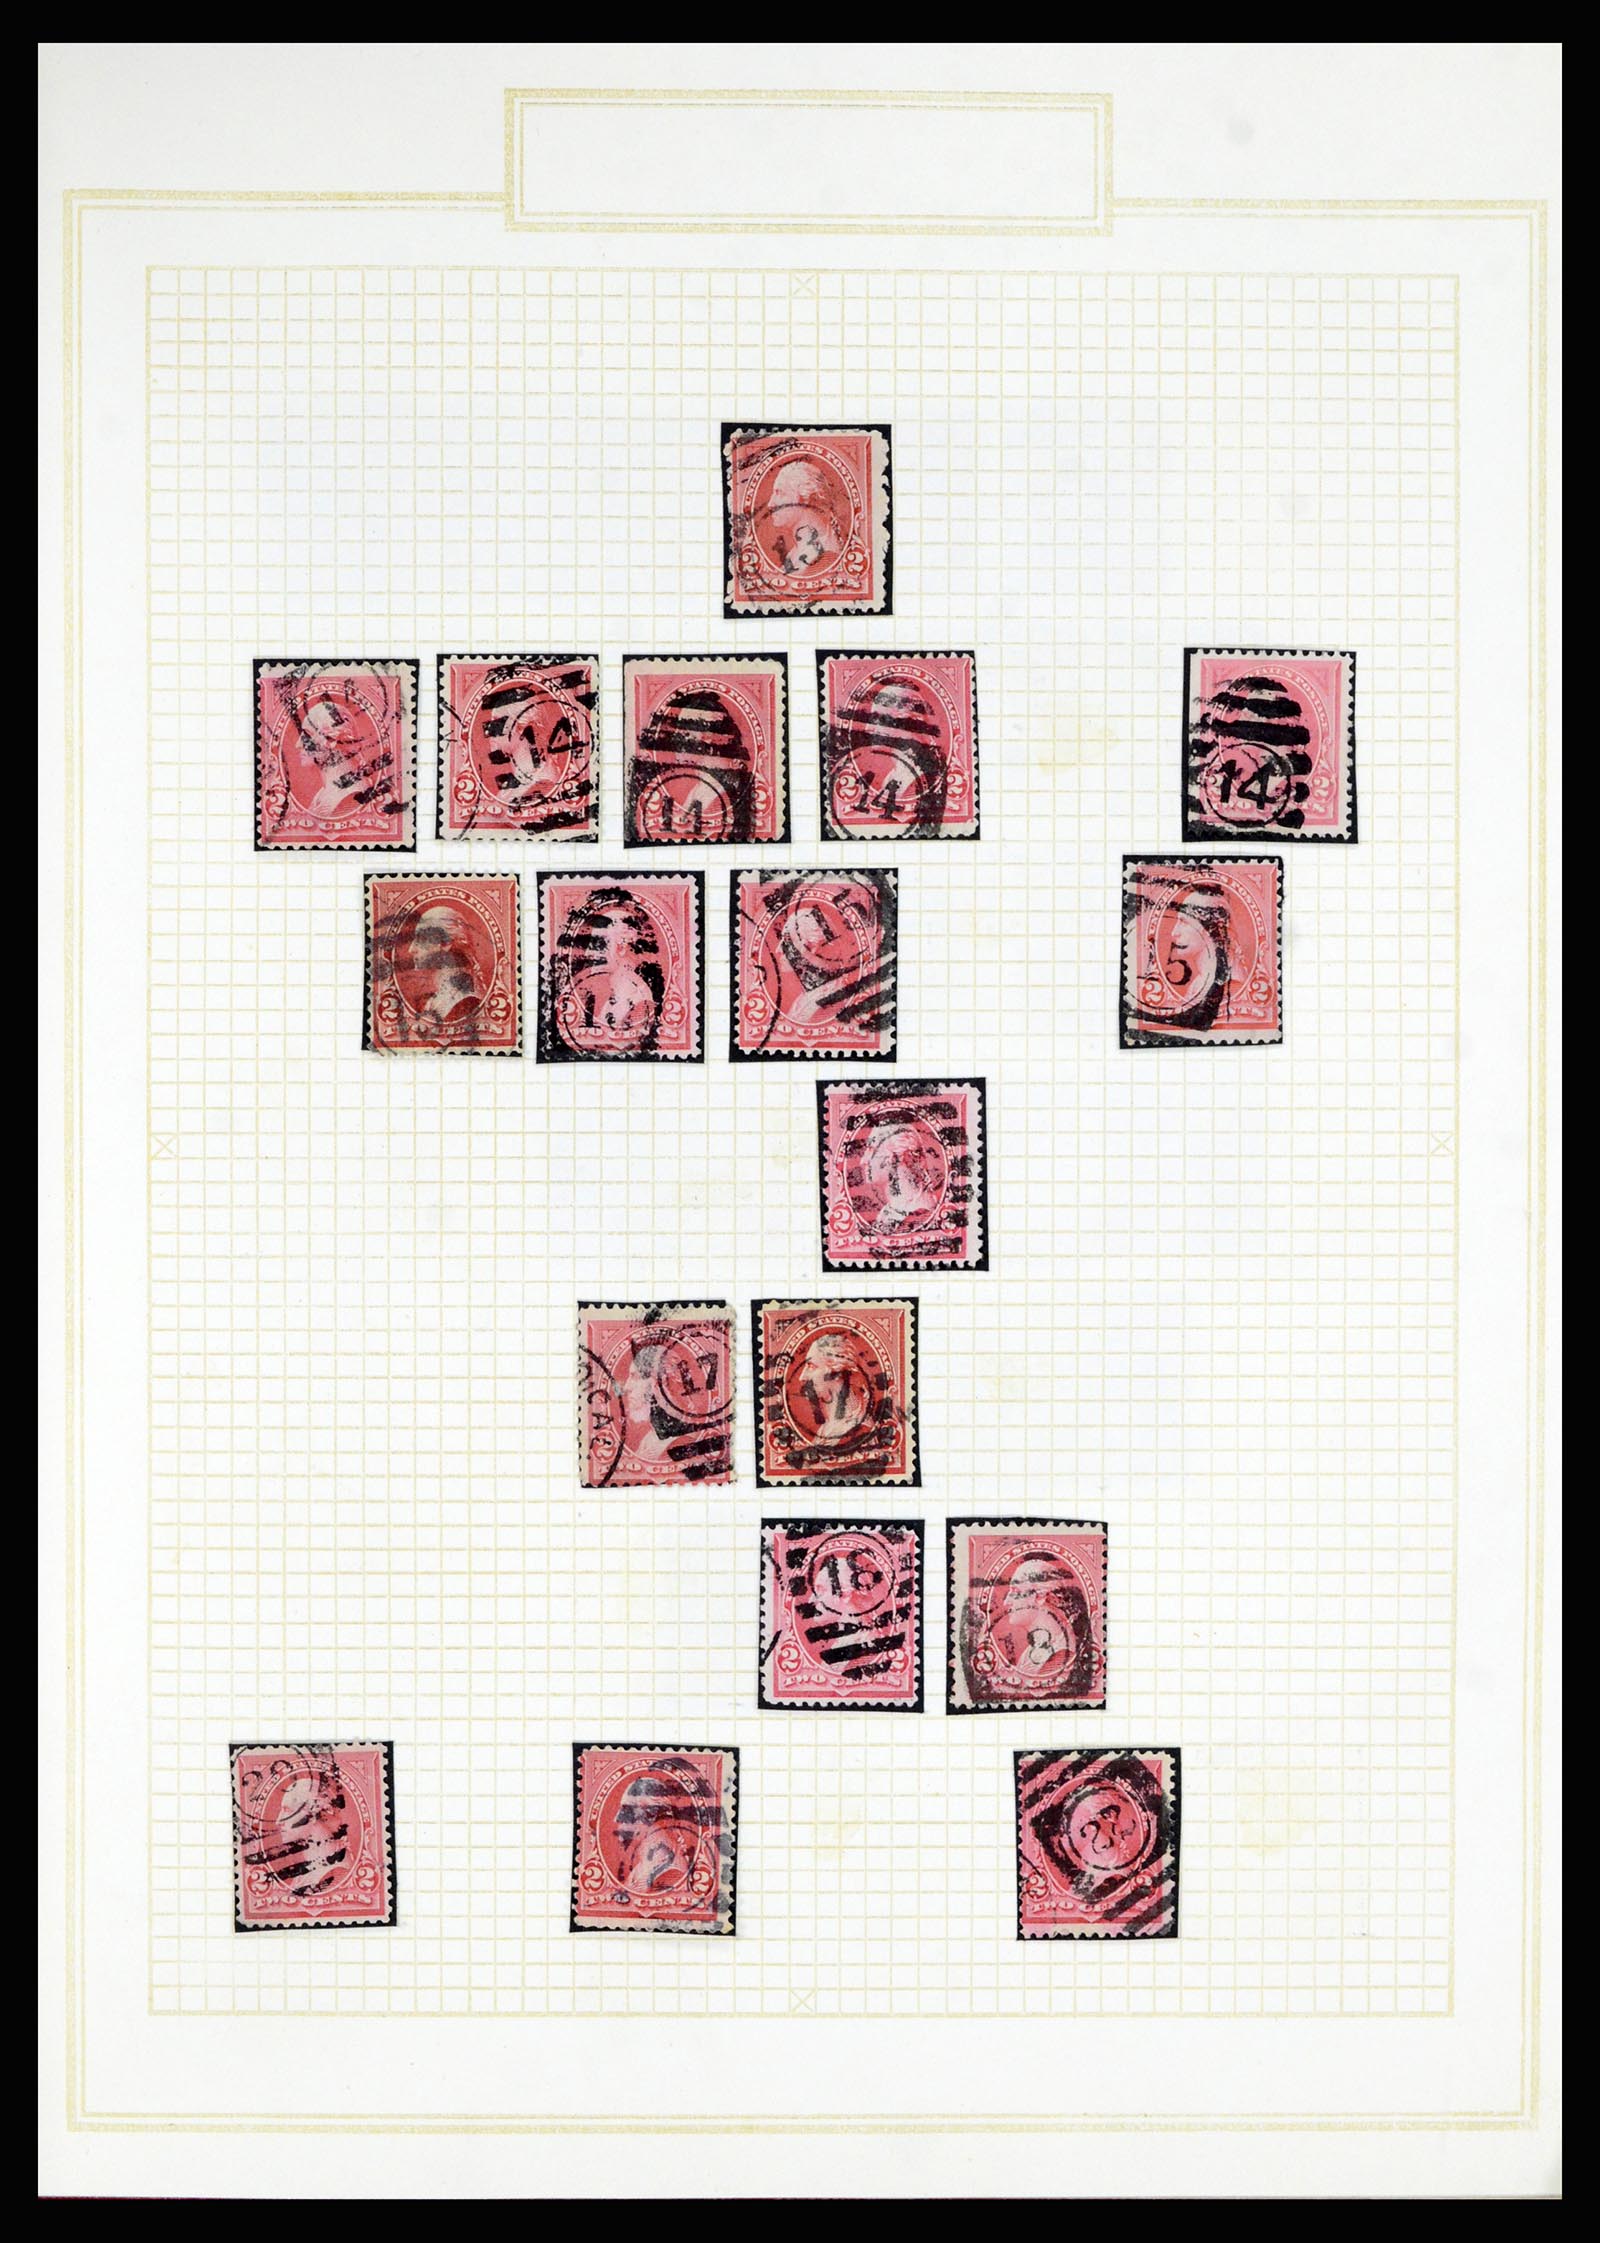 36866 015 - Stamp collection 36866 USA sorting lot.